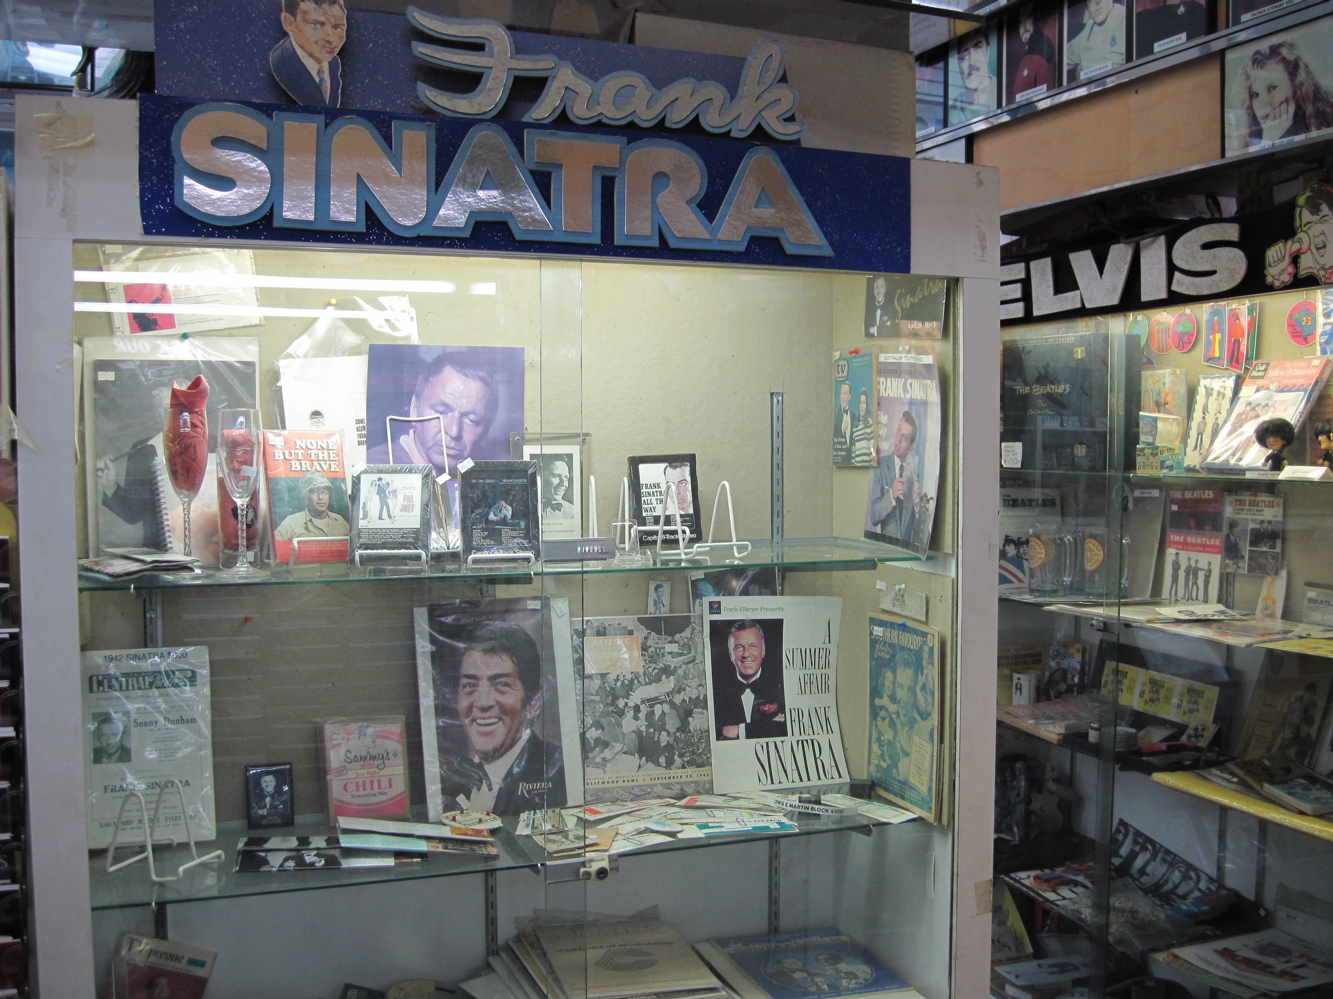 Colony+Records+Sinatra+Elvis.jpg